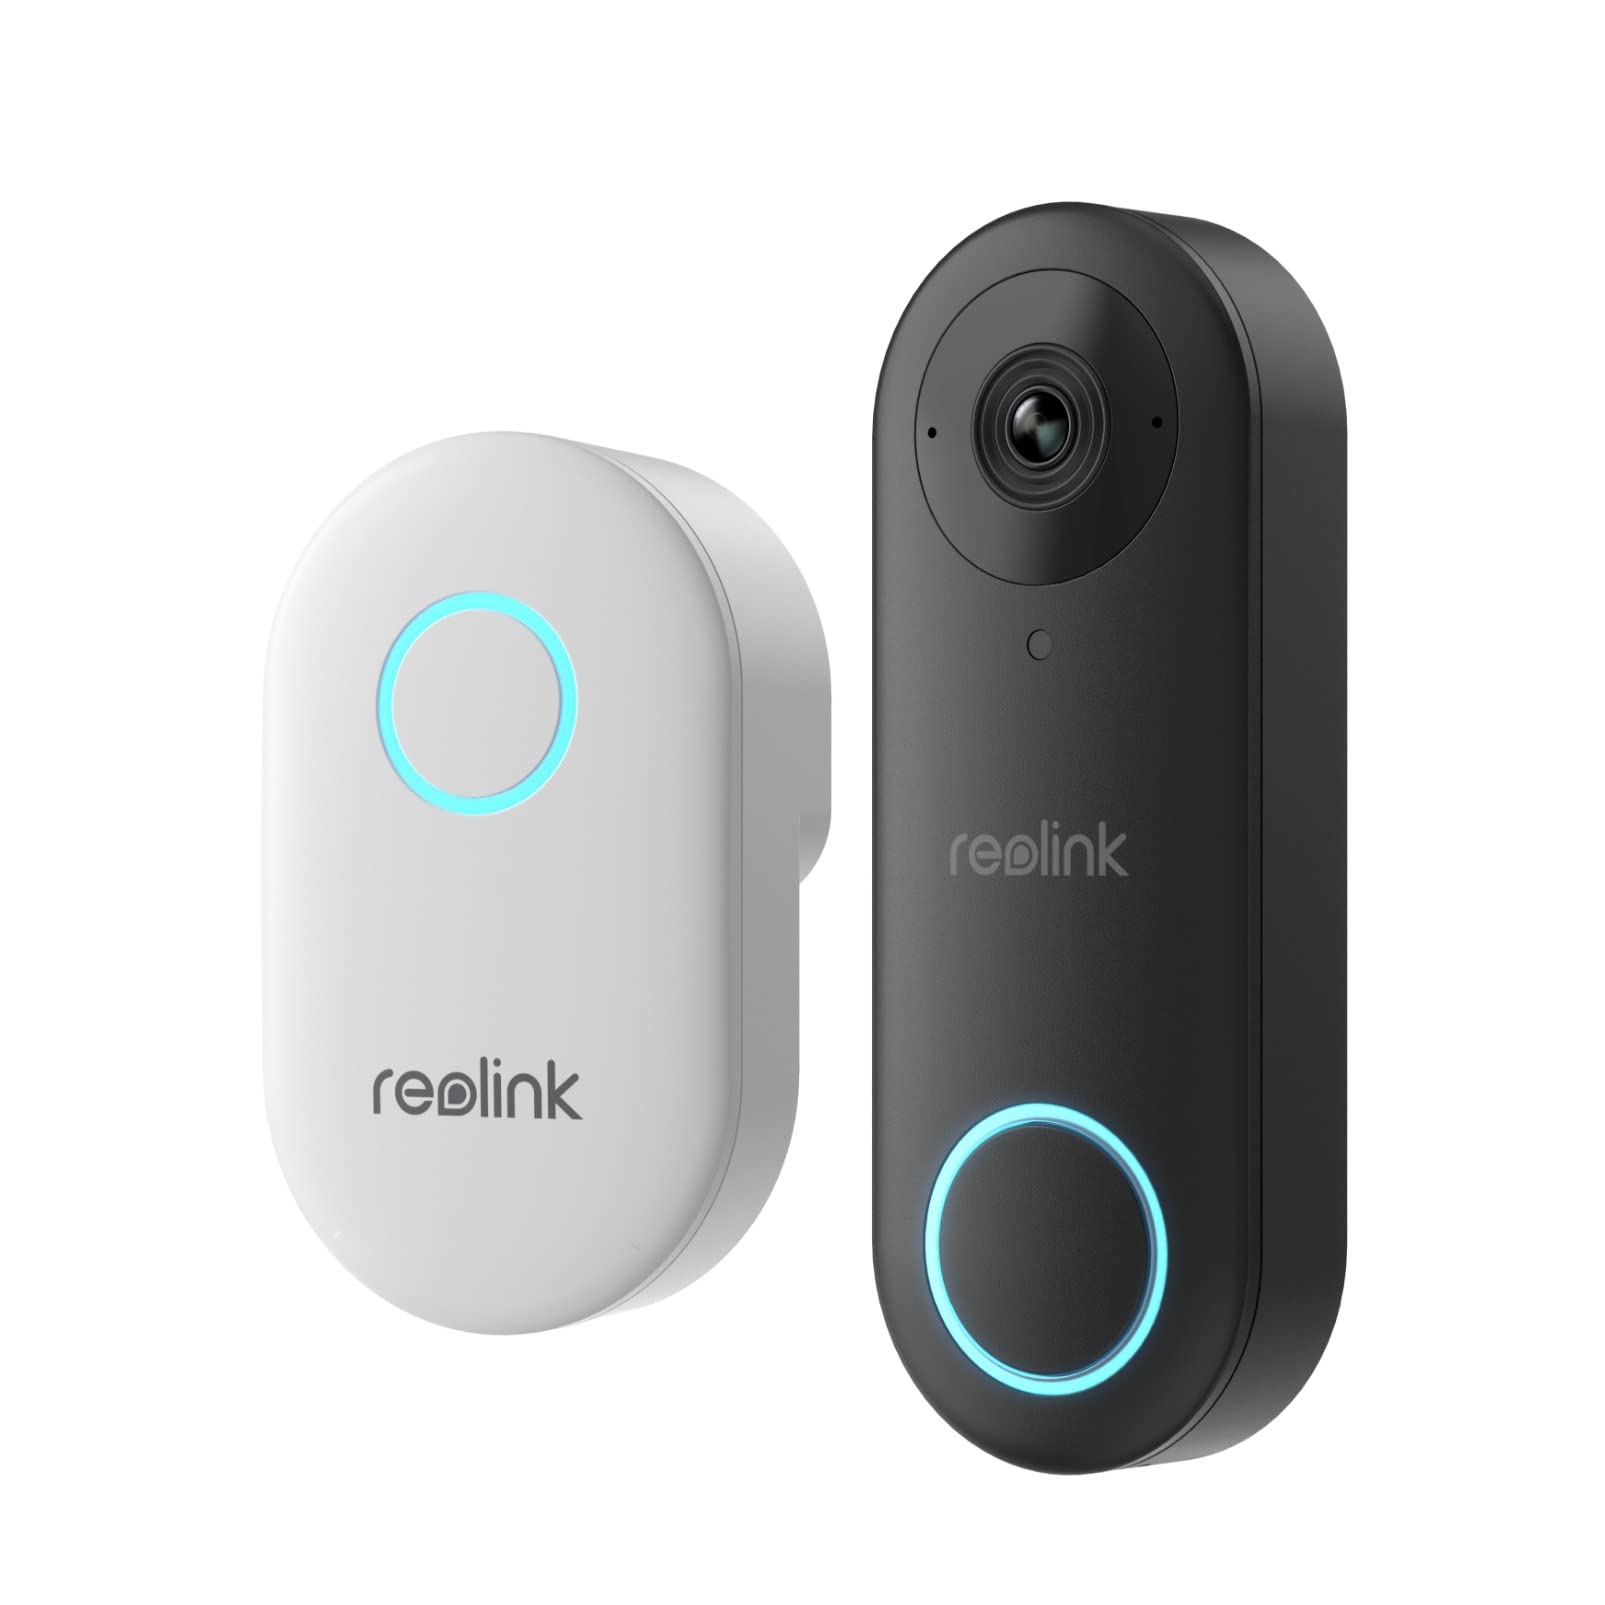 Reolink ドアベルWiFiカメラ - 有線5MP屋外ビデオドアベル、5G Wifiセキュリティカメラシス...